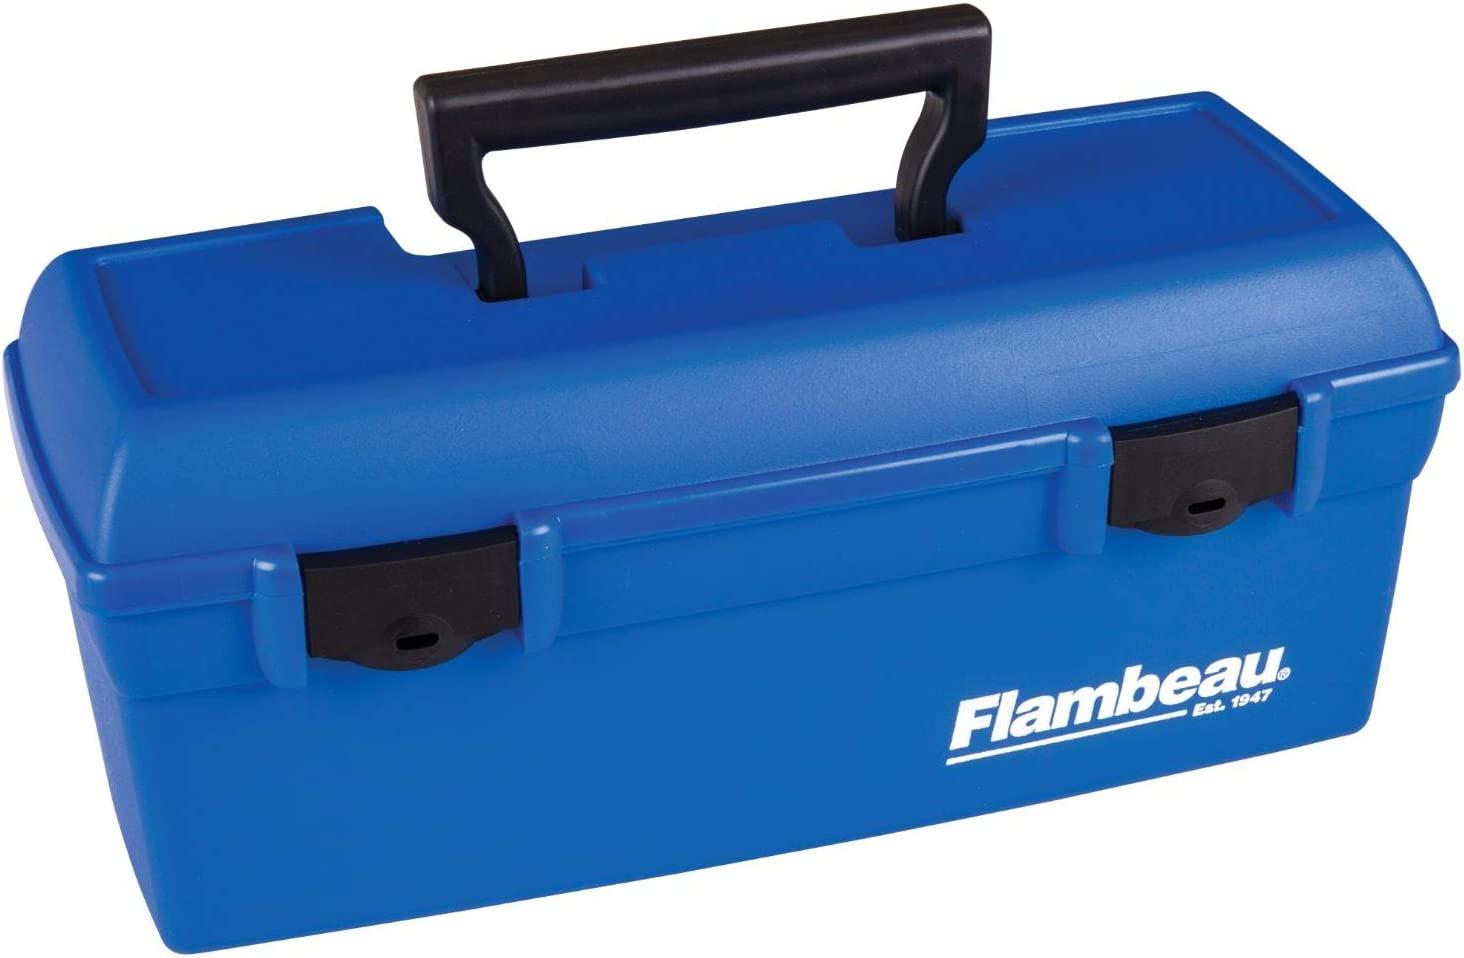 Flambeau Outdoors 6009TD Lil Brute Fishing Gear Box for $5